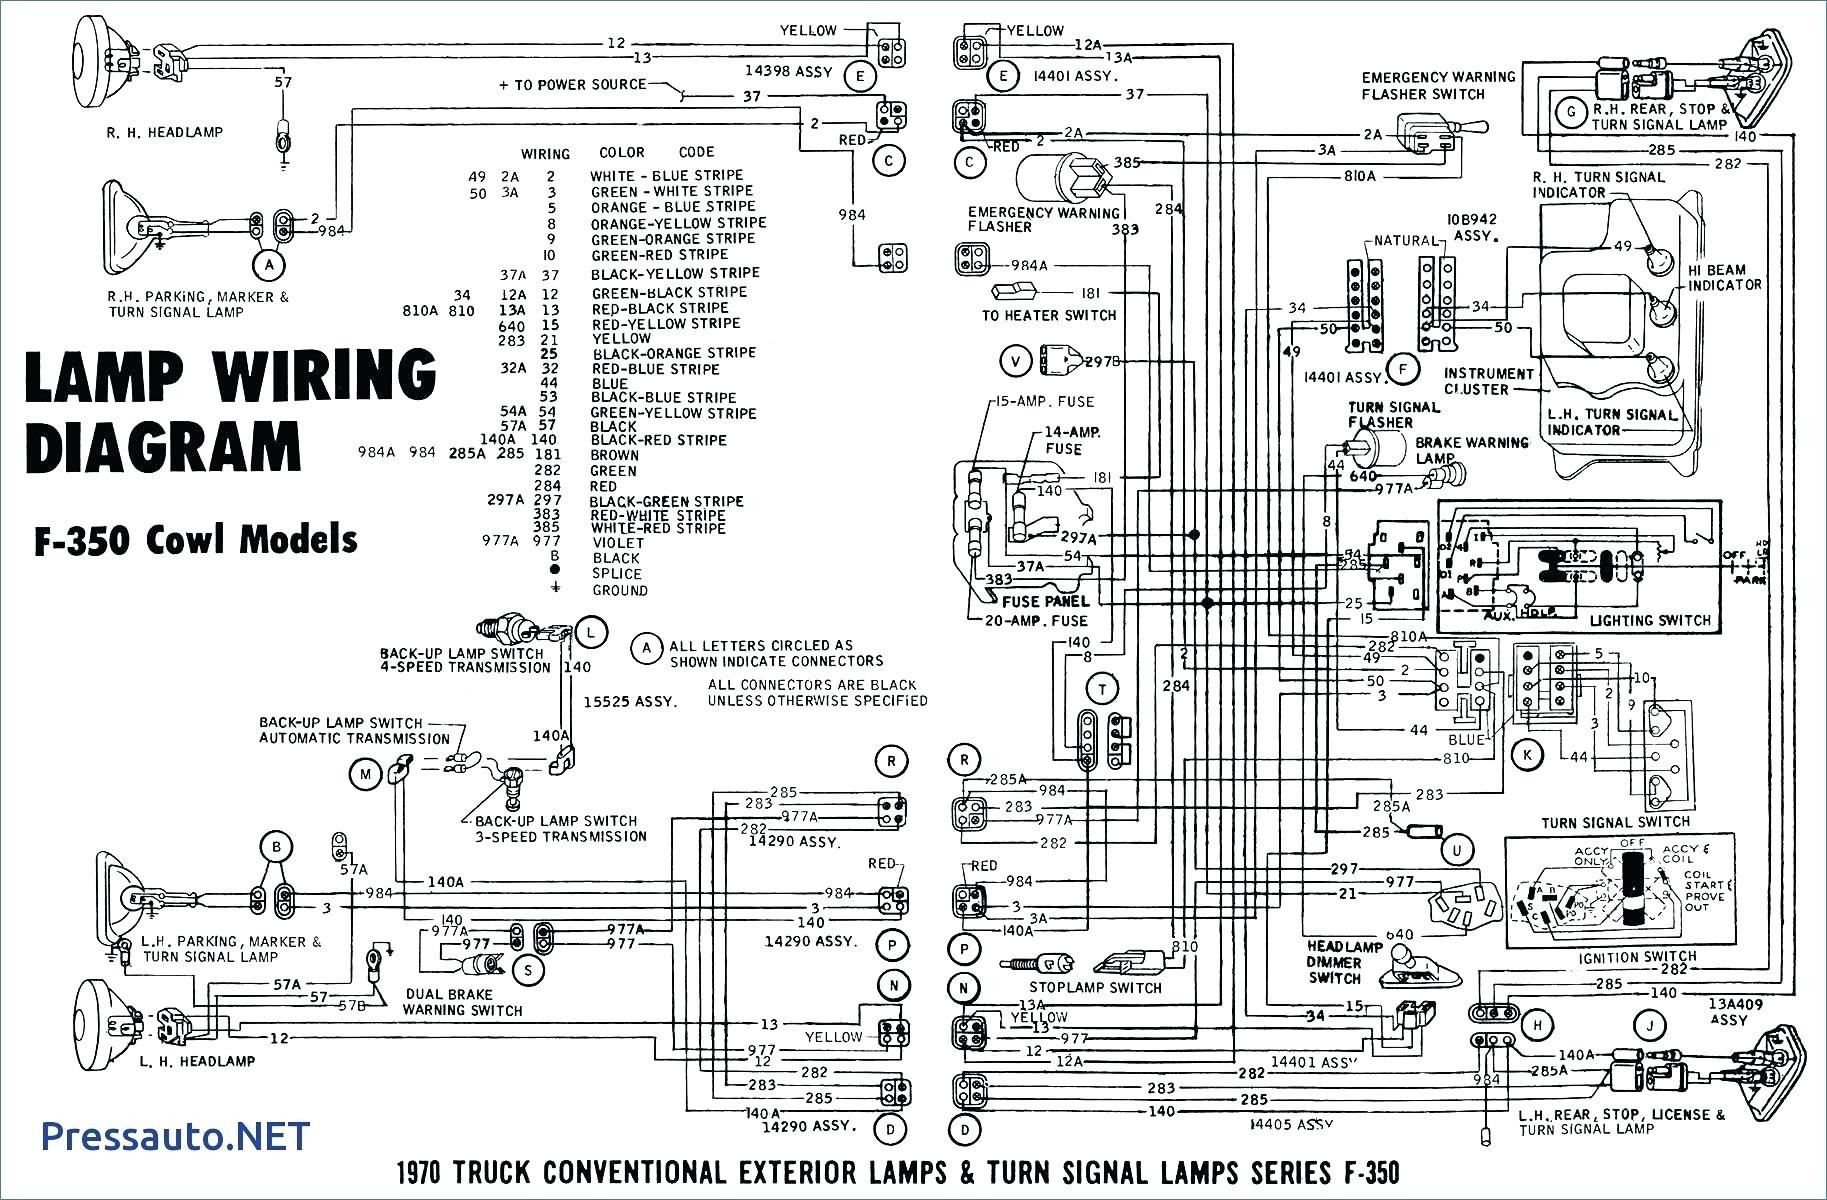 Rheem Air Handler Wiring Diagram